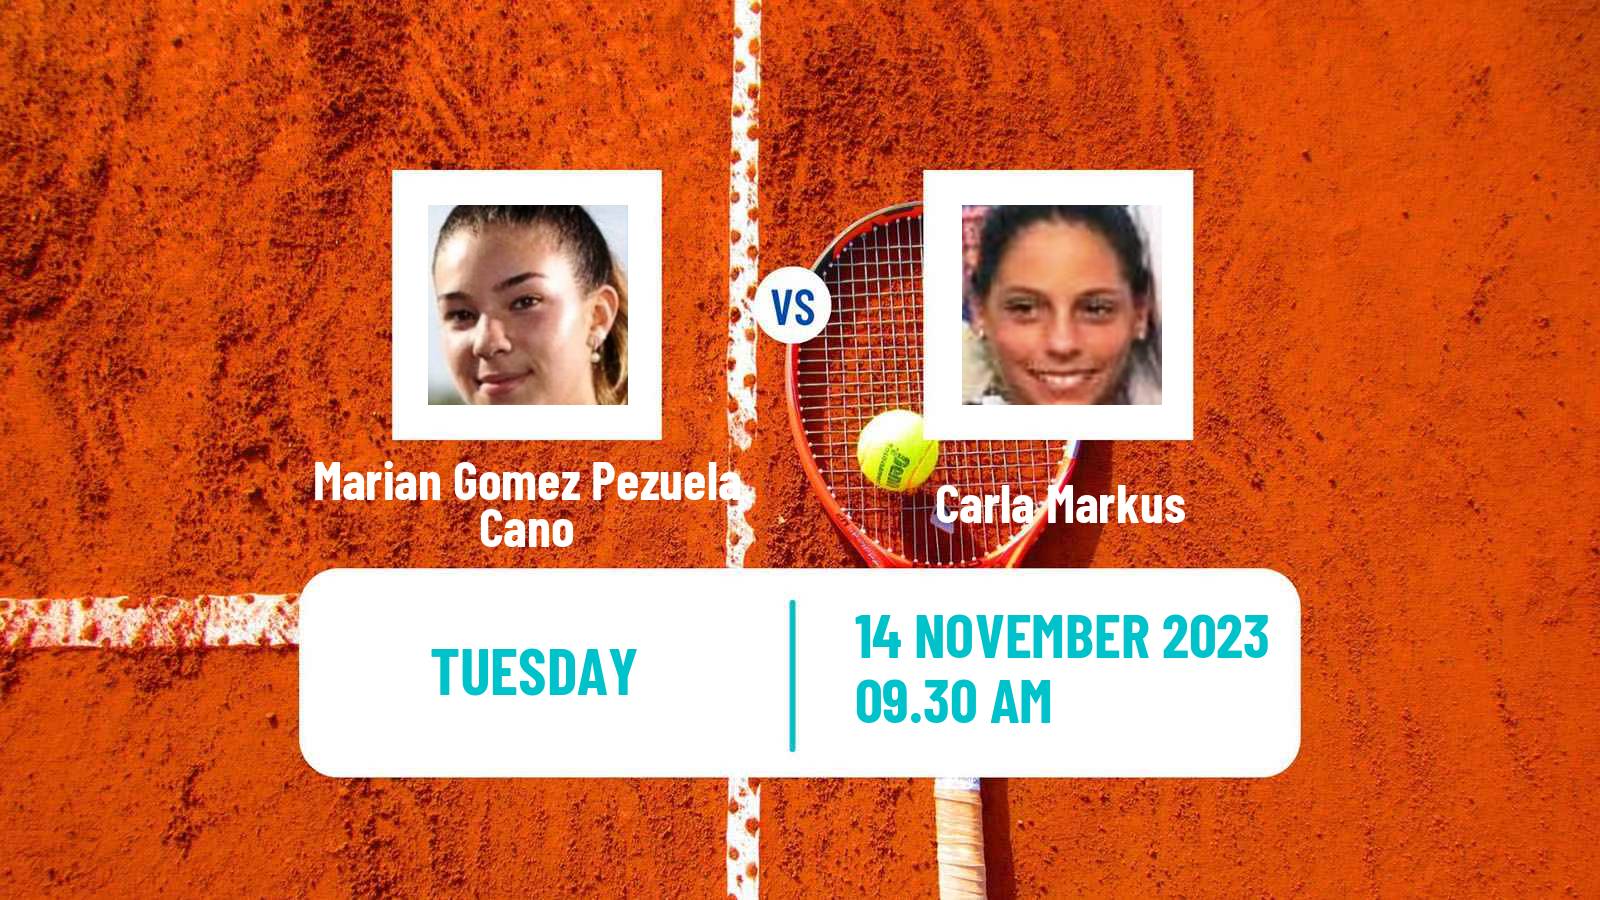 Tennis ITF W15 Buenos Aires 2 Women 2023 Marian Gomez Pezuela Cano - Carla Markus